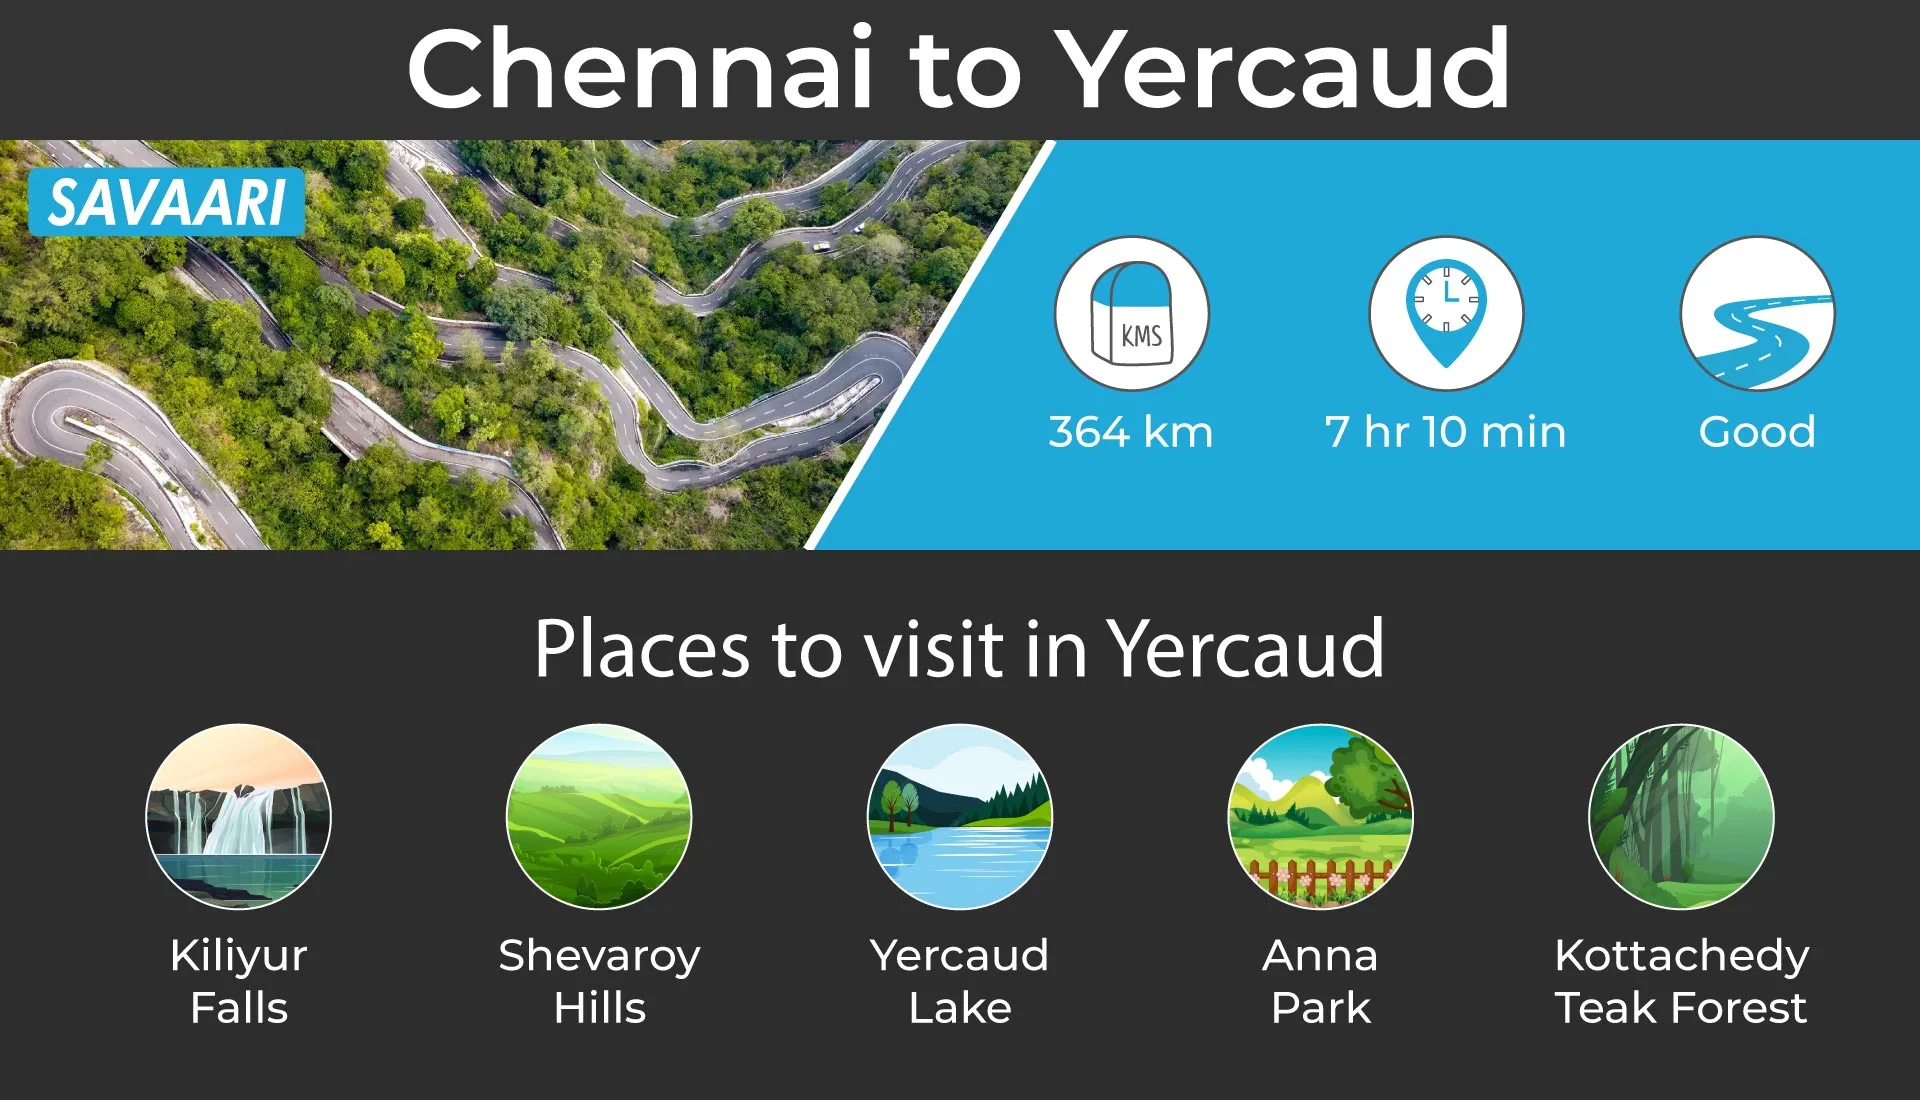 Places to visit near Chennai